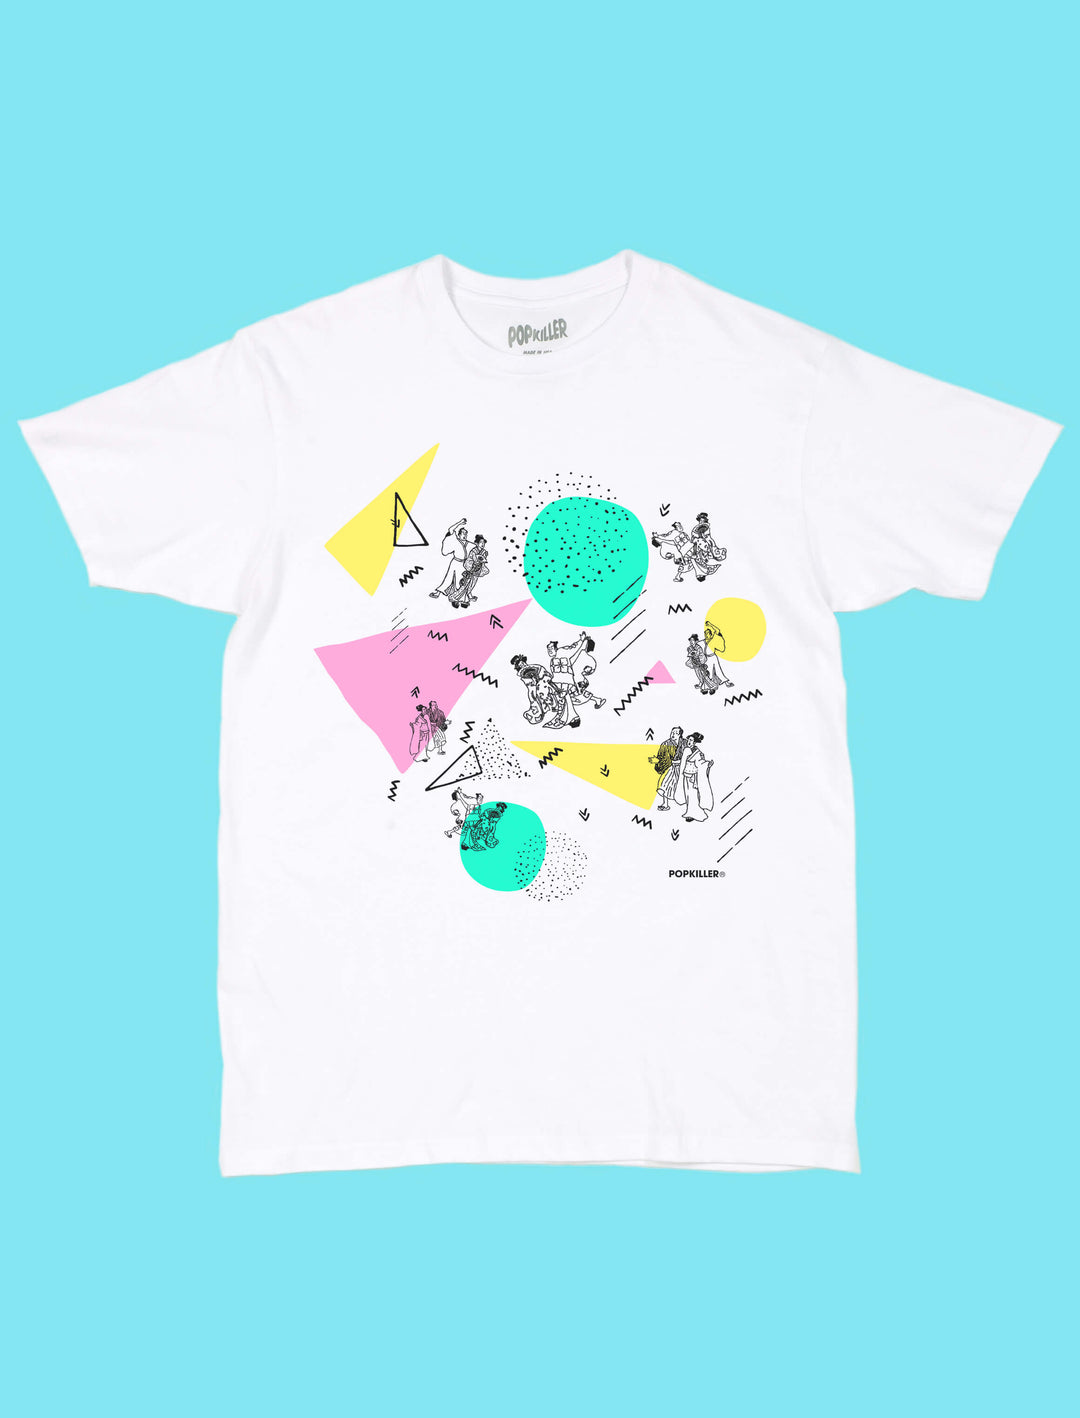 White Japanese Memphis style graphic t-shirt.